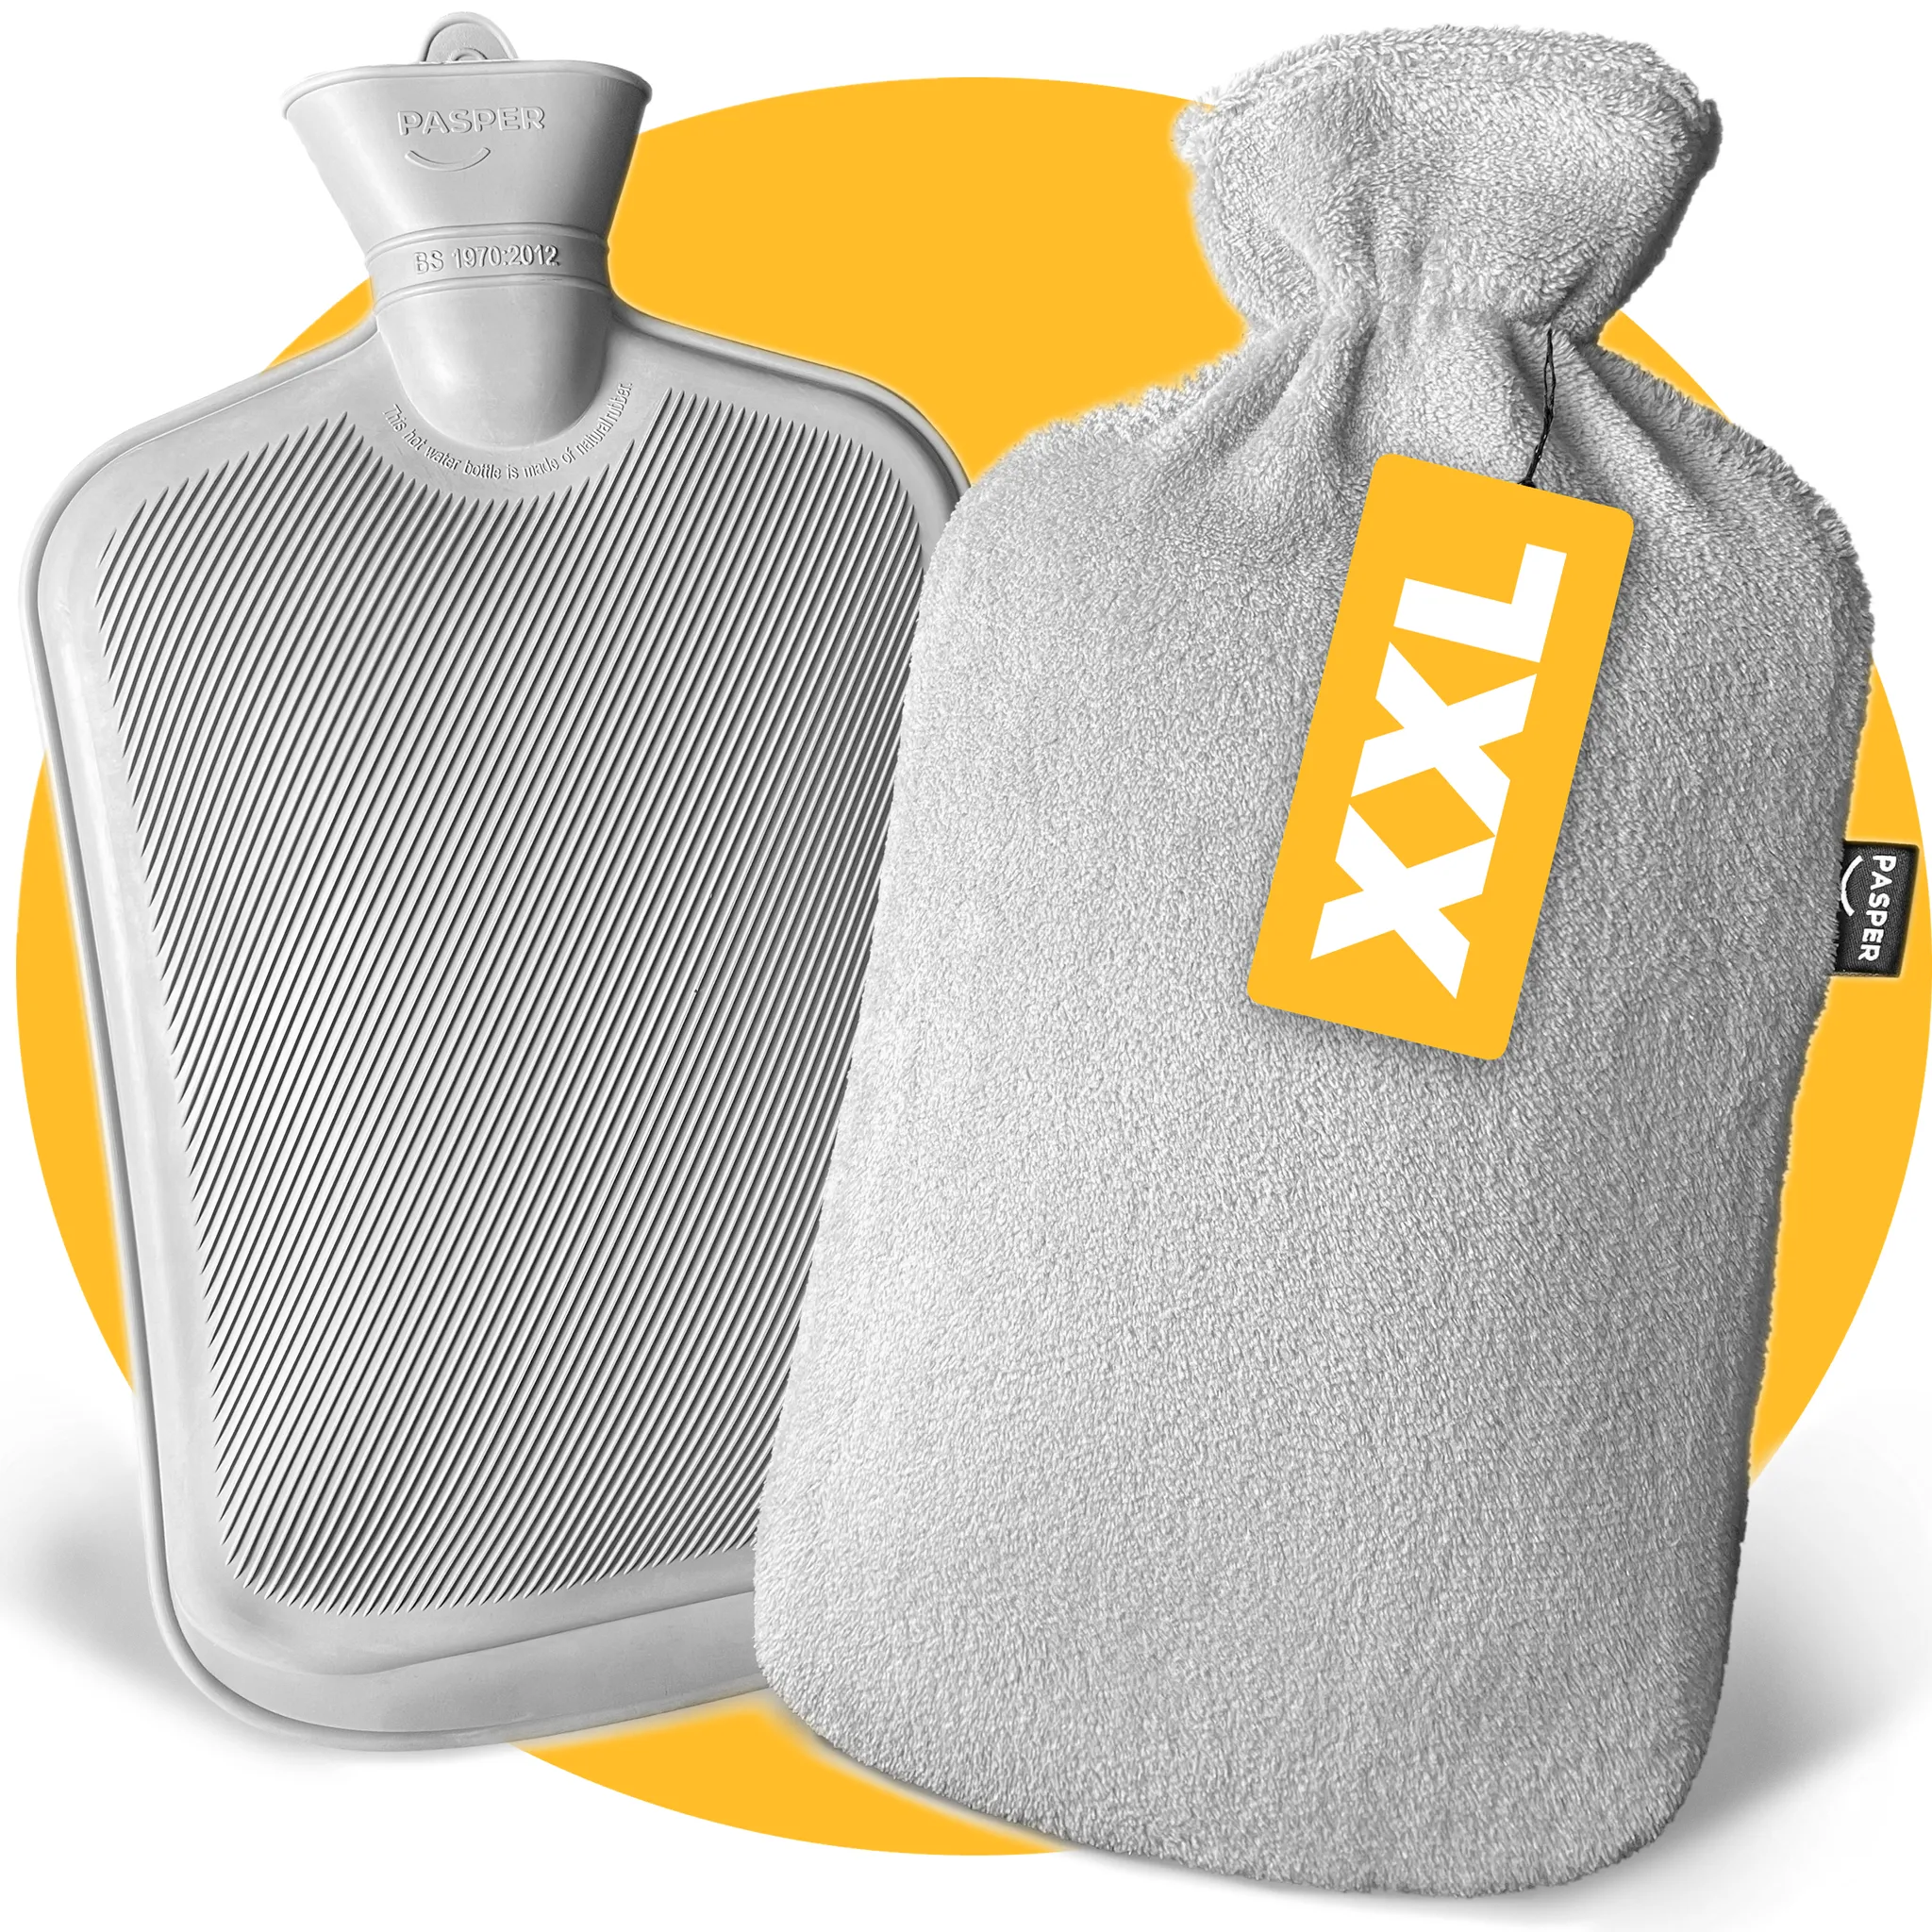 XL Wärmeflasche Wärmeschlauch Bettflasche mit Bezug 2 Liter